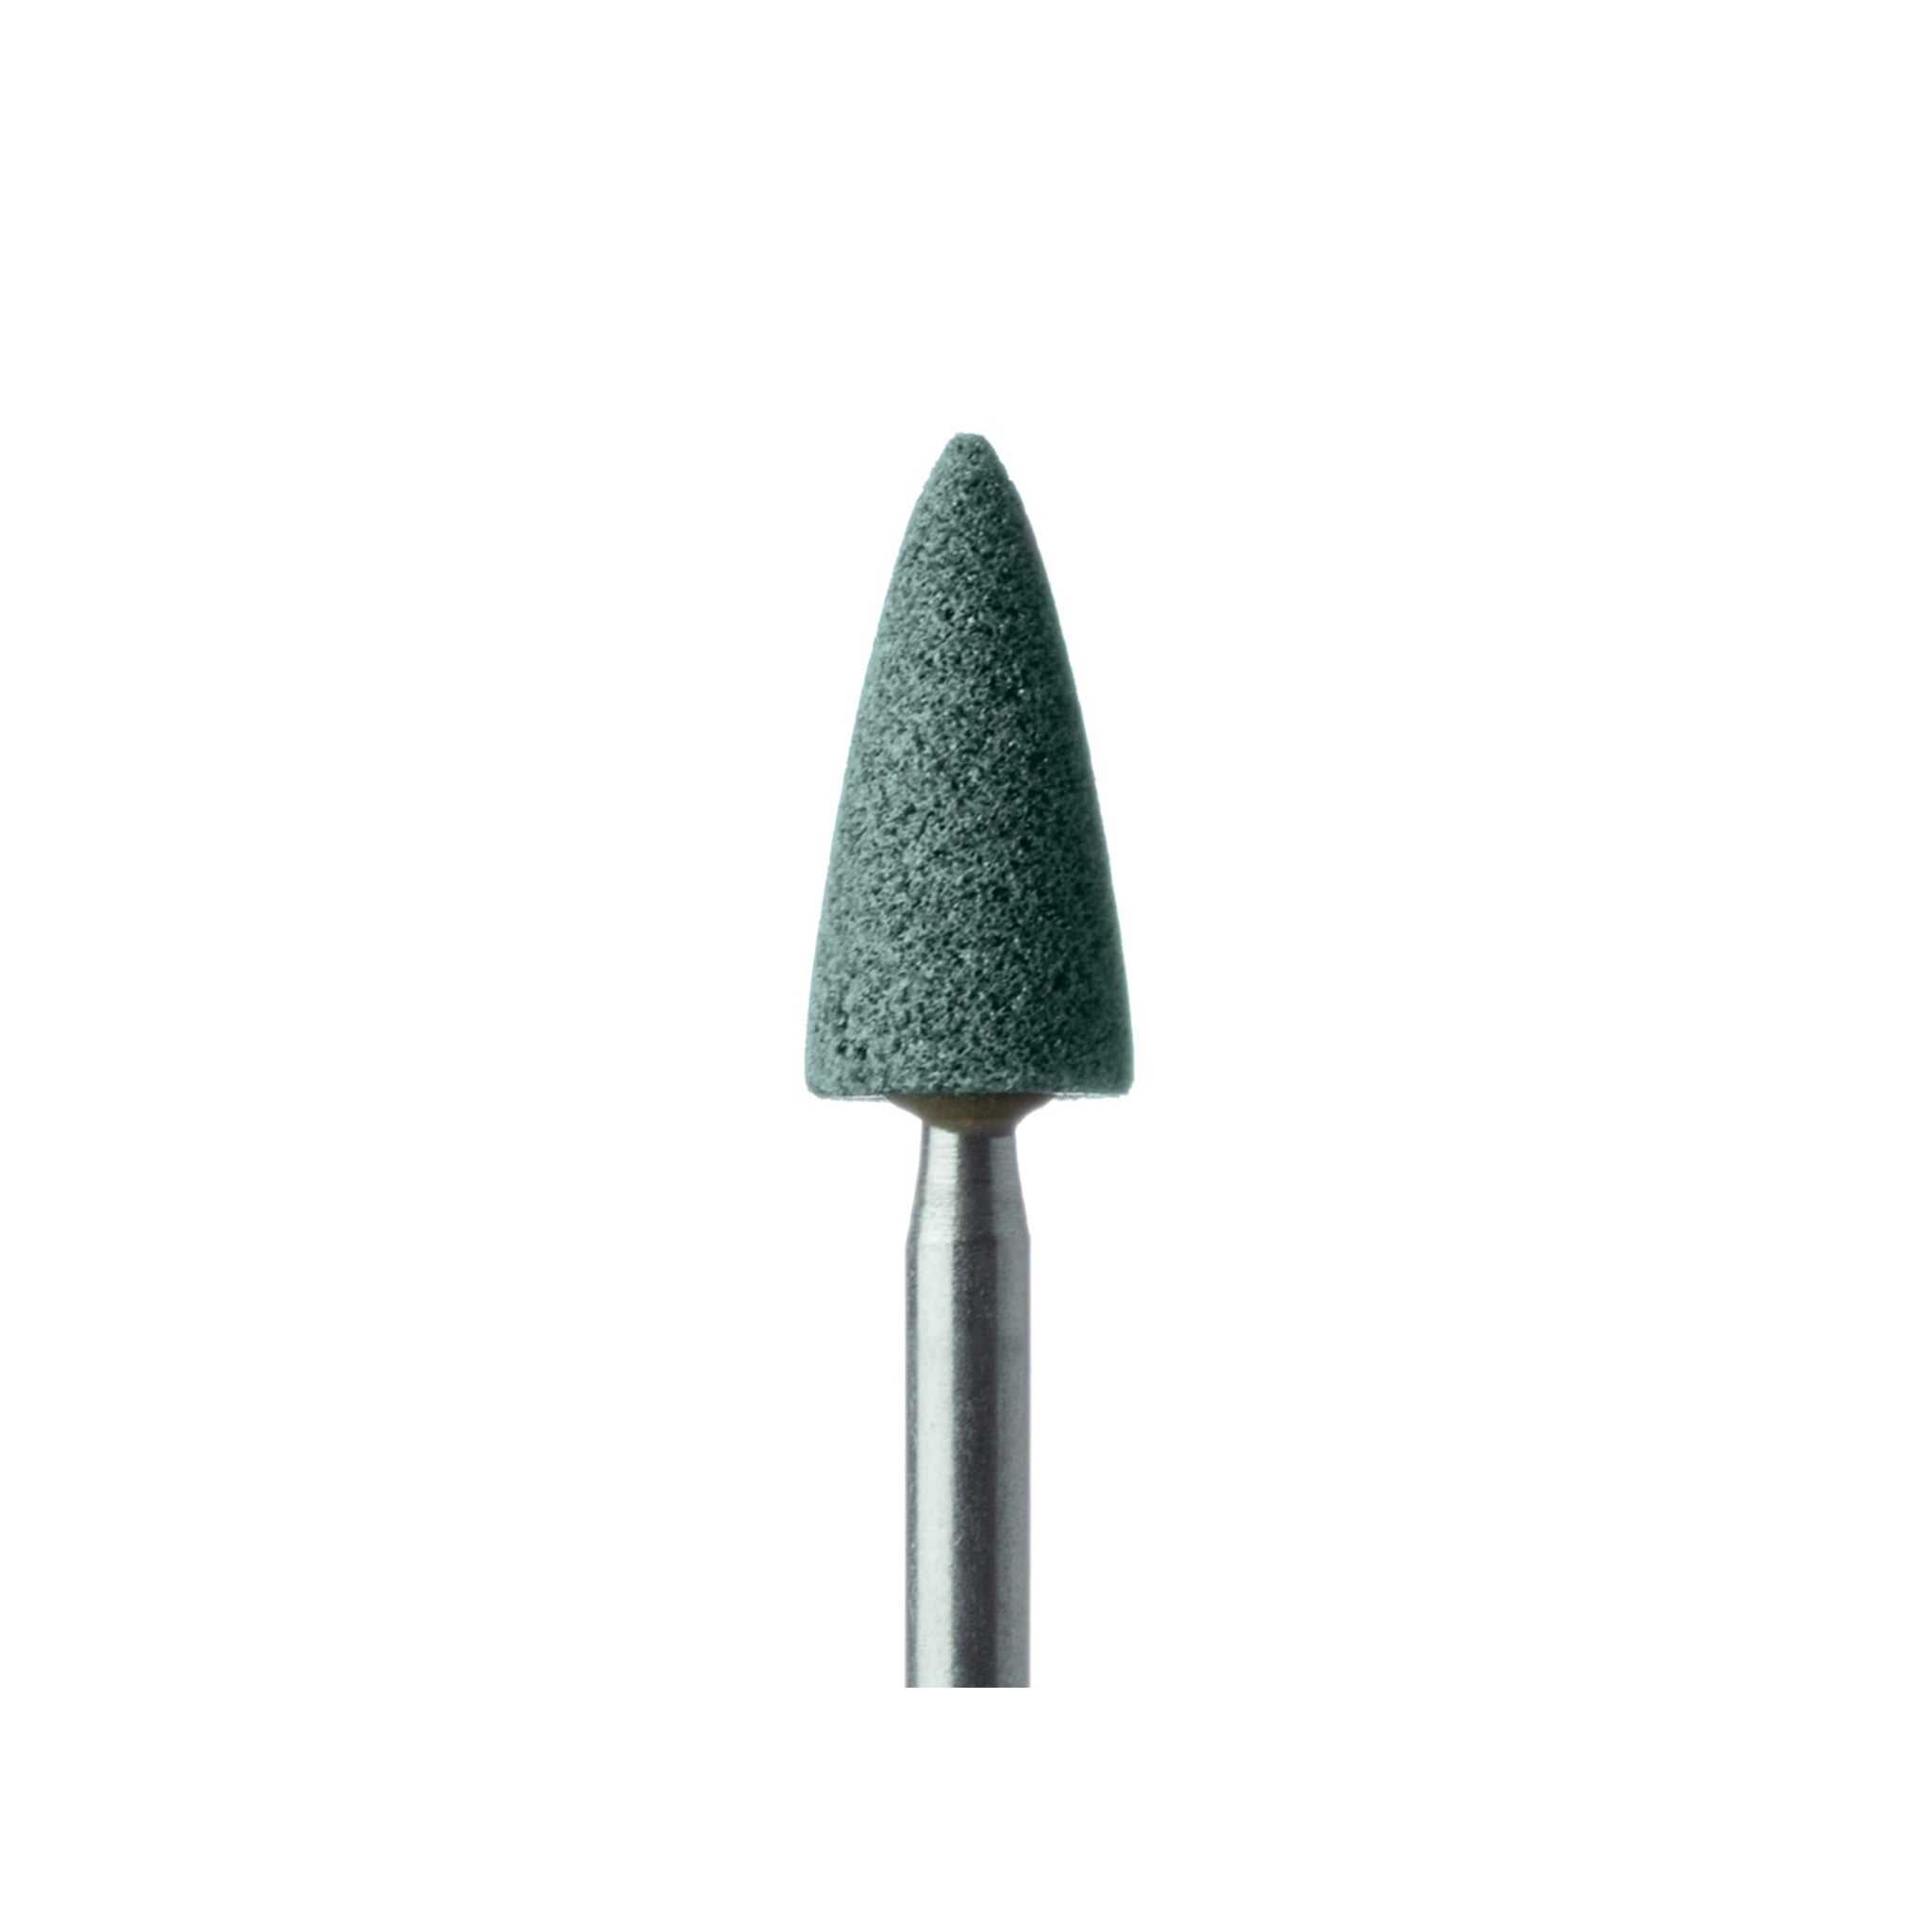 Silicon carbide grinder | Fig. 665 | ISO 273